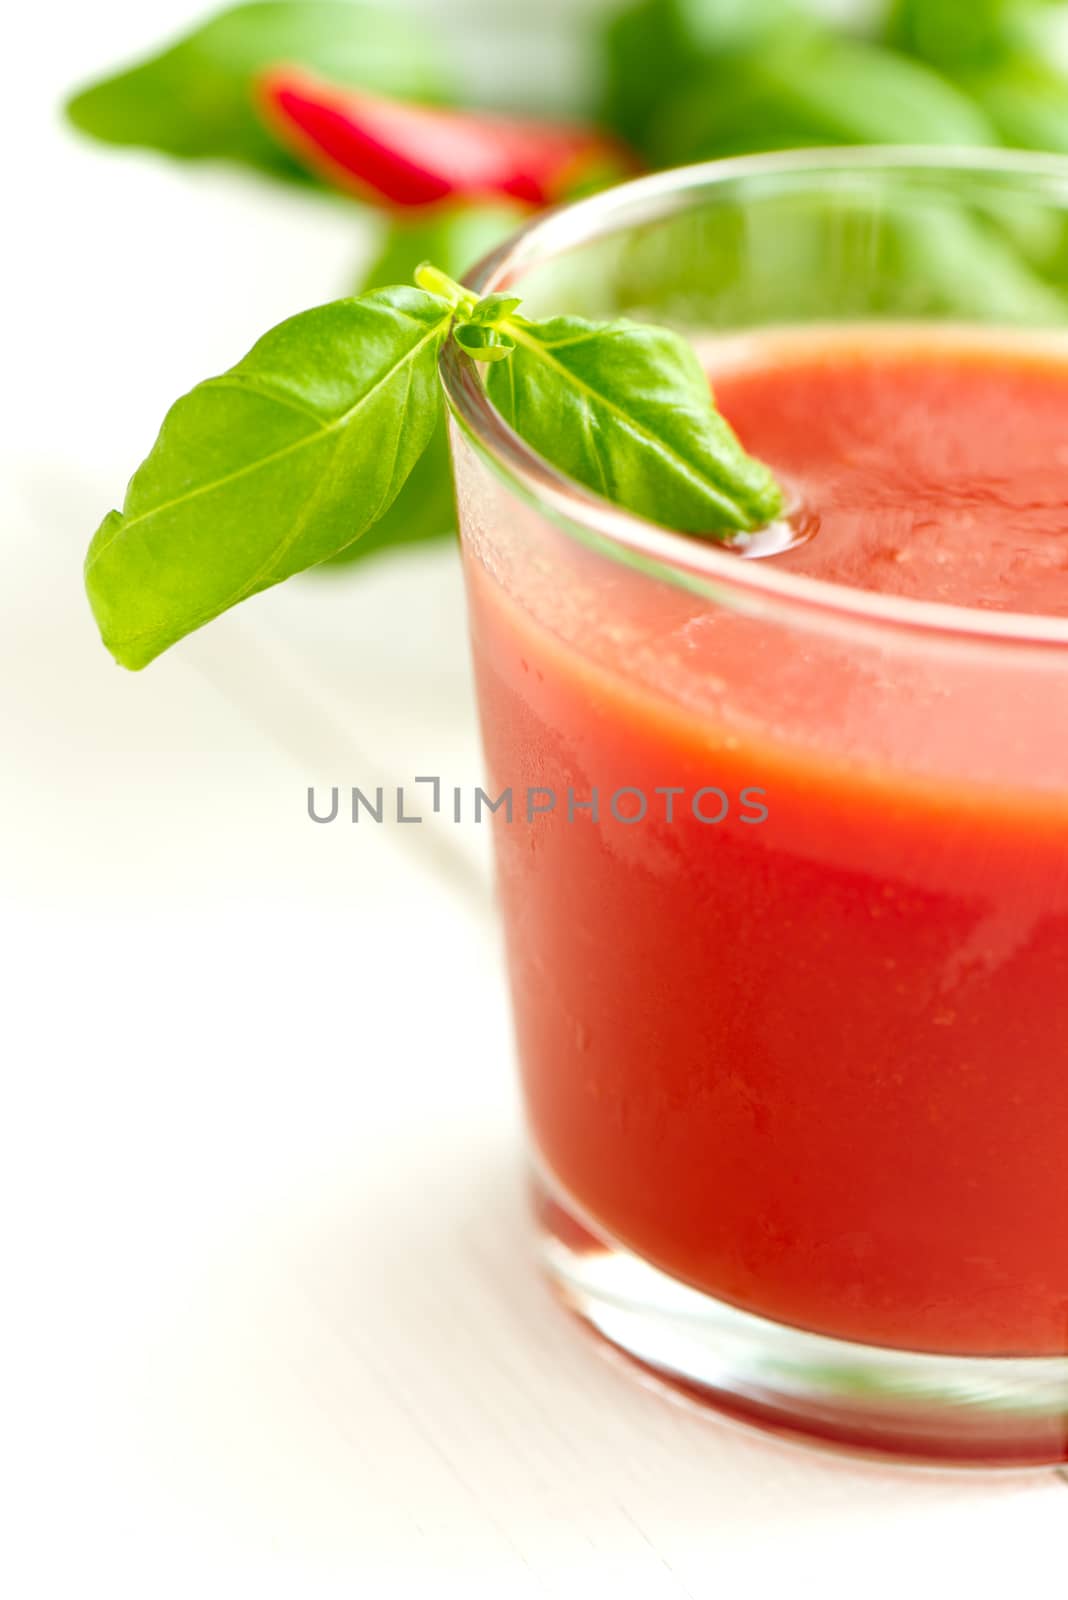 Tomato juice basil leaf on white wooden table background